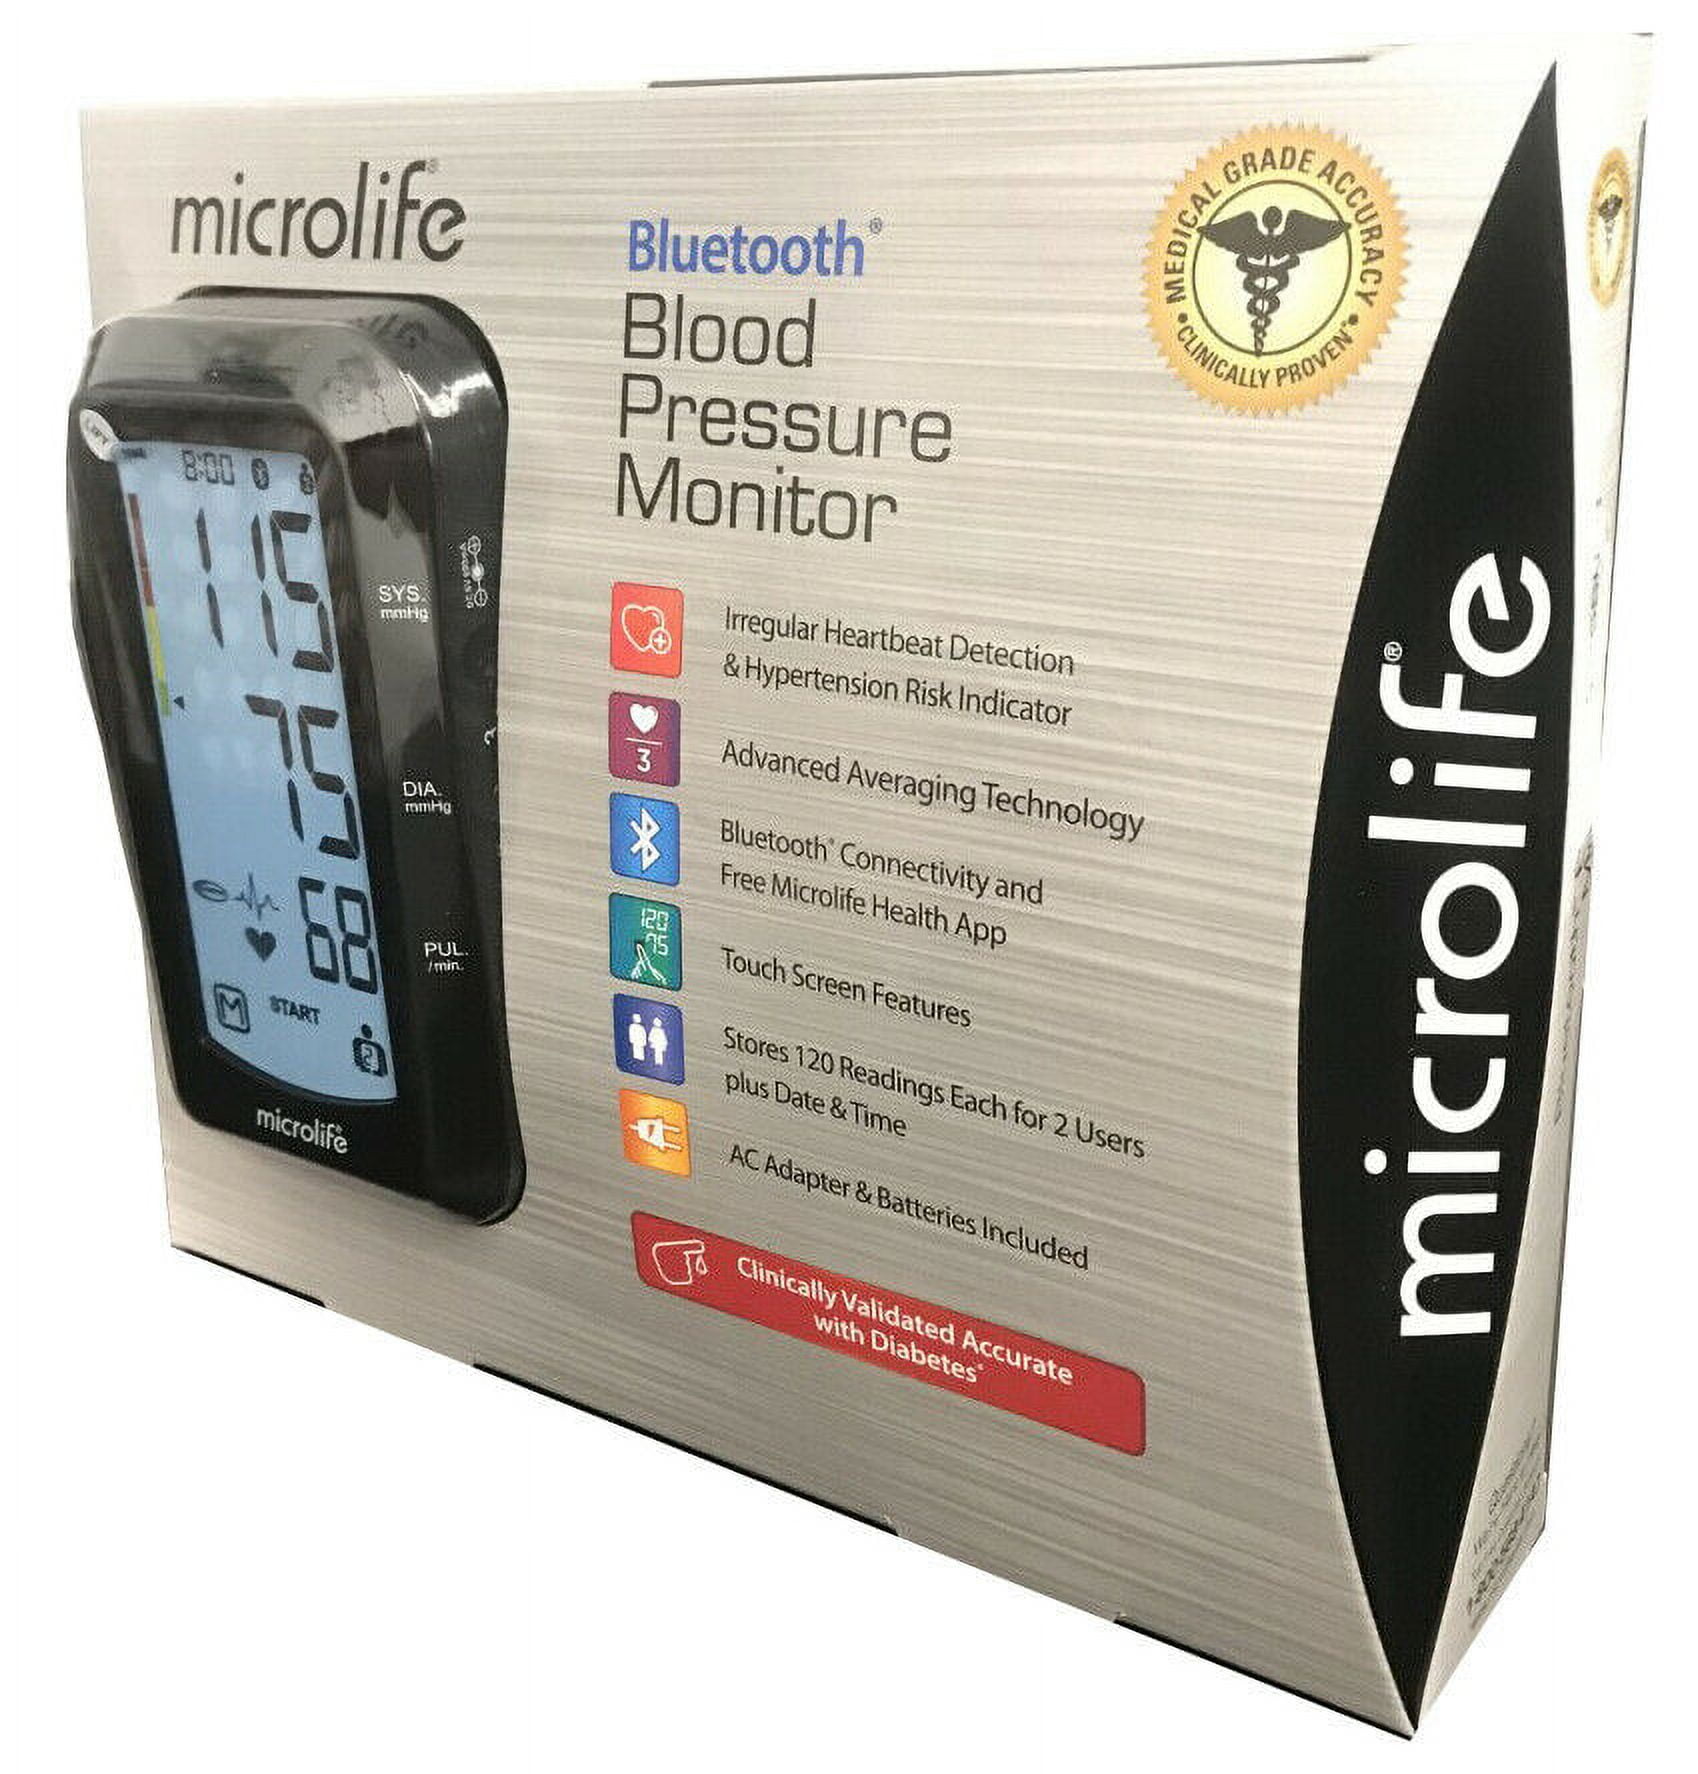 Microlife Bluetooth Digital Blood Pressure Monitor Model #BP3GY1-2N